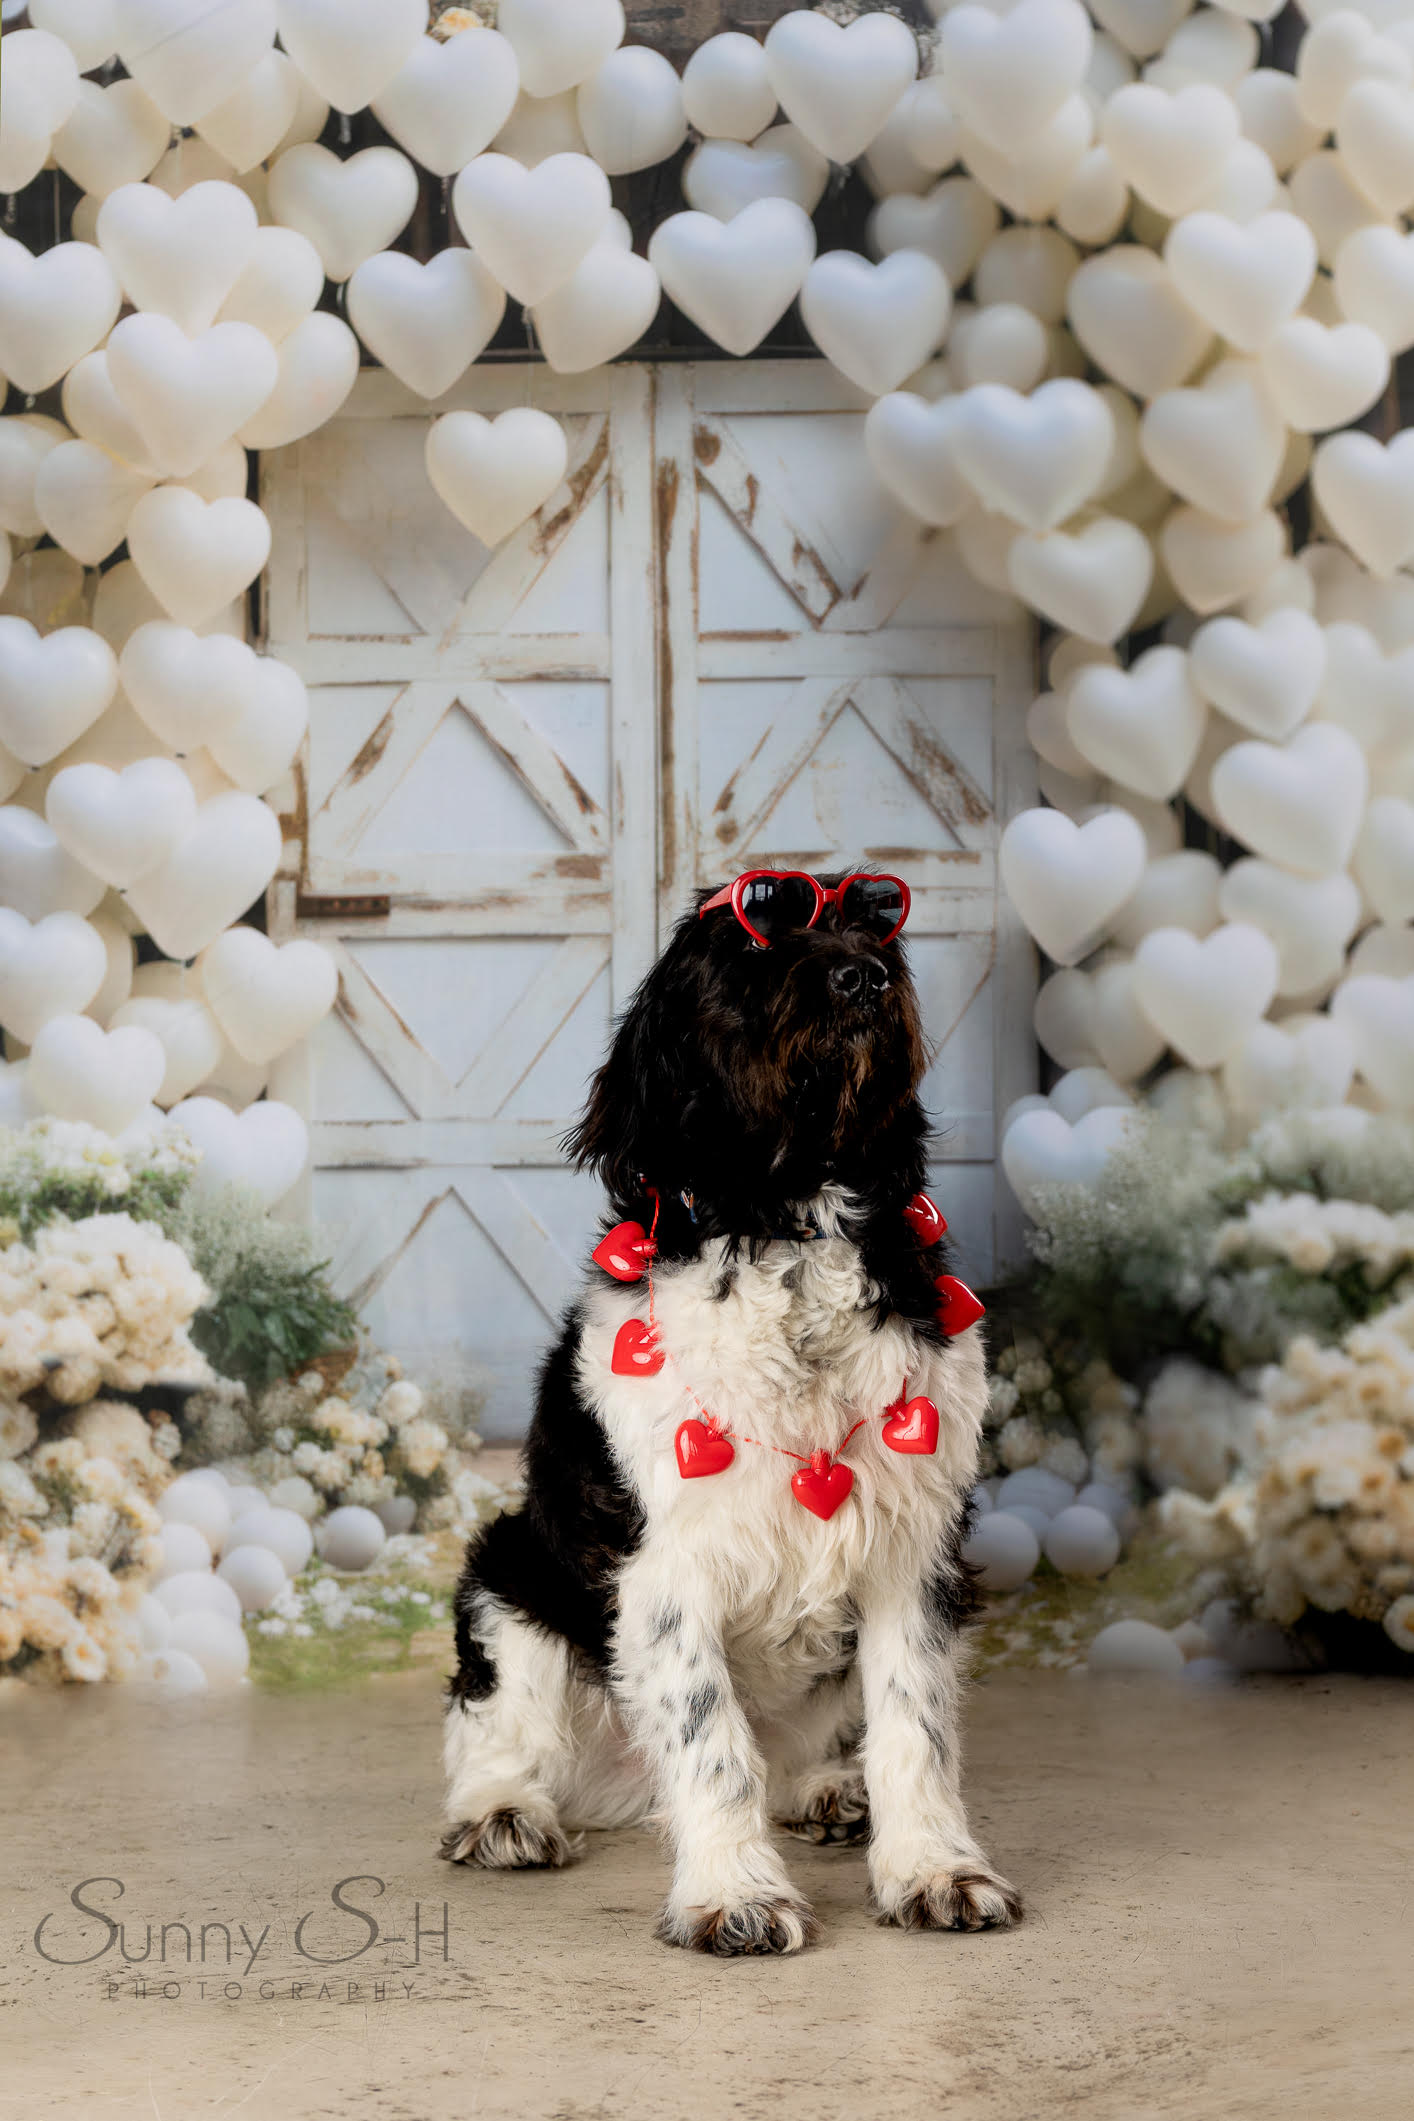 Kate Valentine Barn Door Hearts Backdrop Designed by Mini MakeBelieve